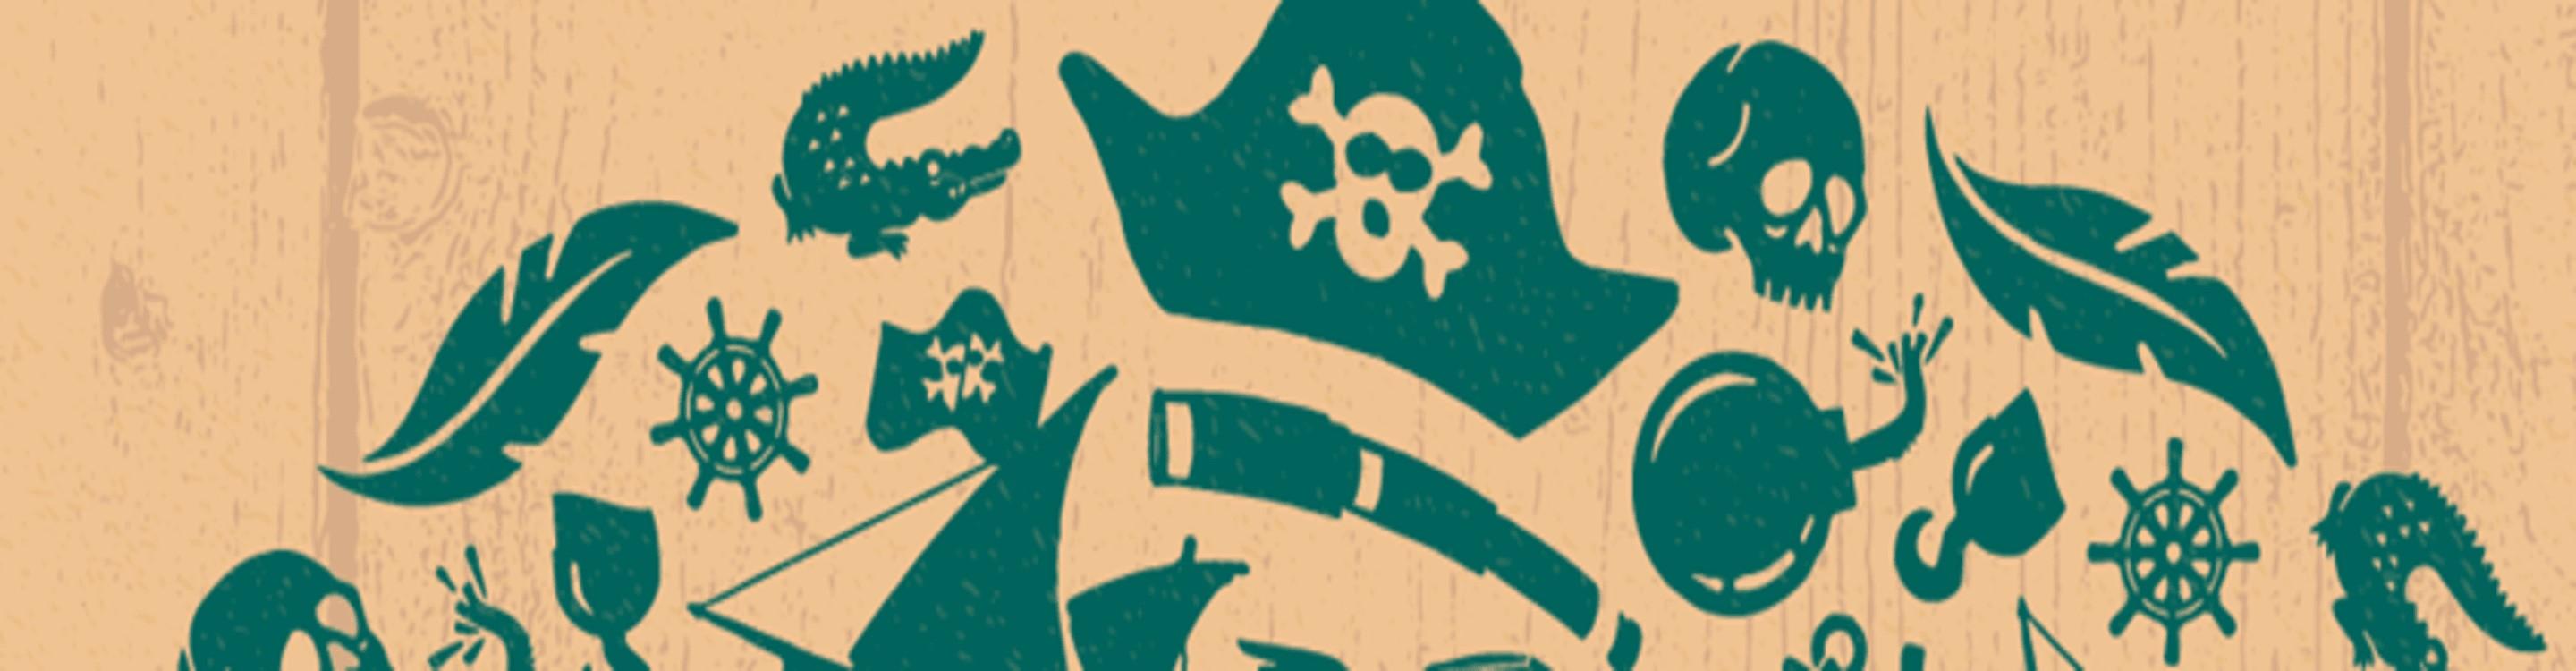 Image of pirate symbols